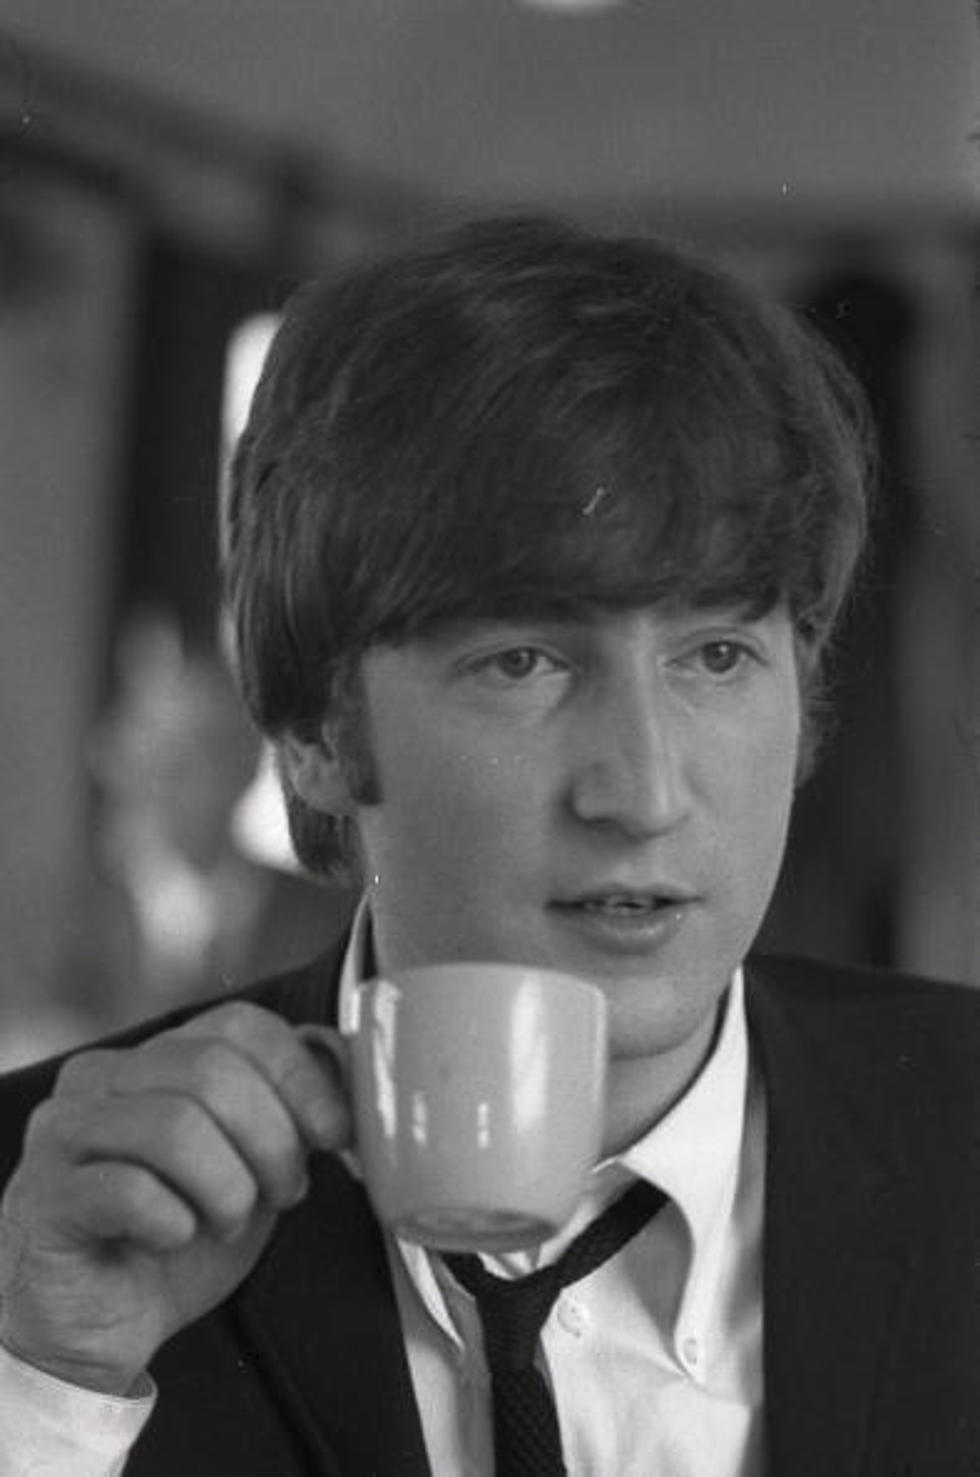 Was John Lennon a Bad Boy in High School?